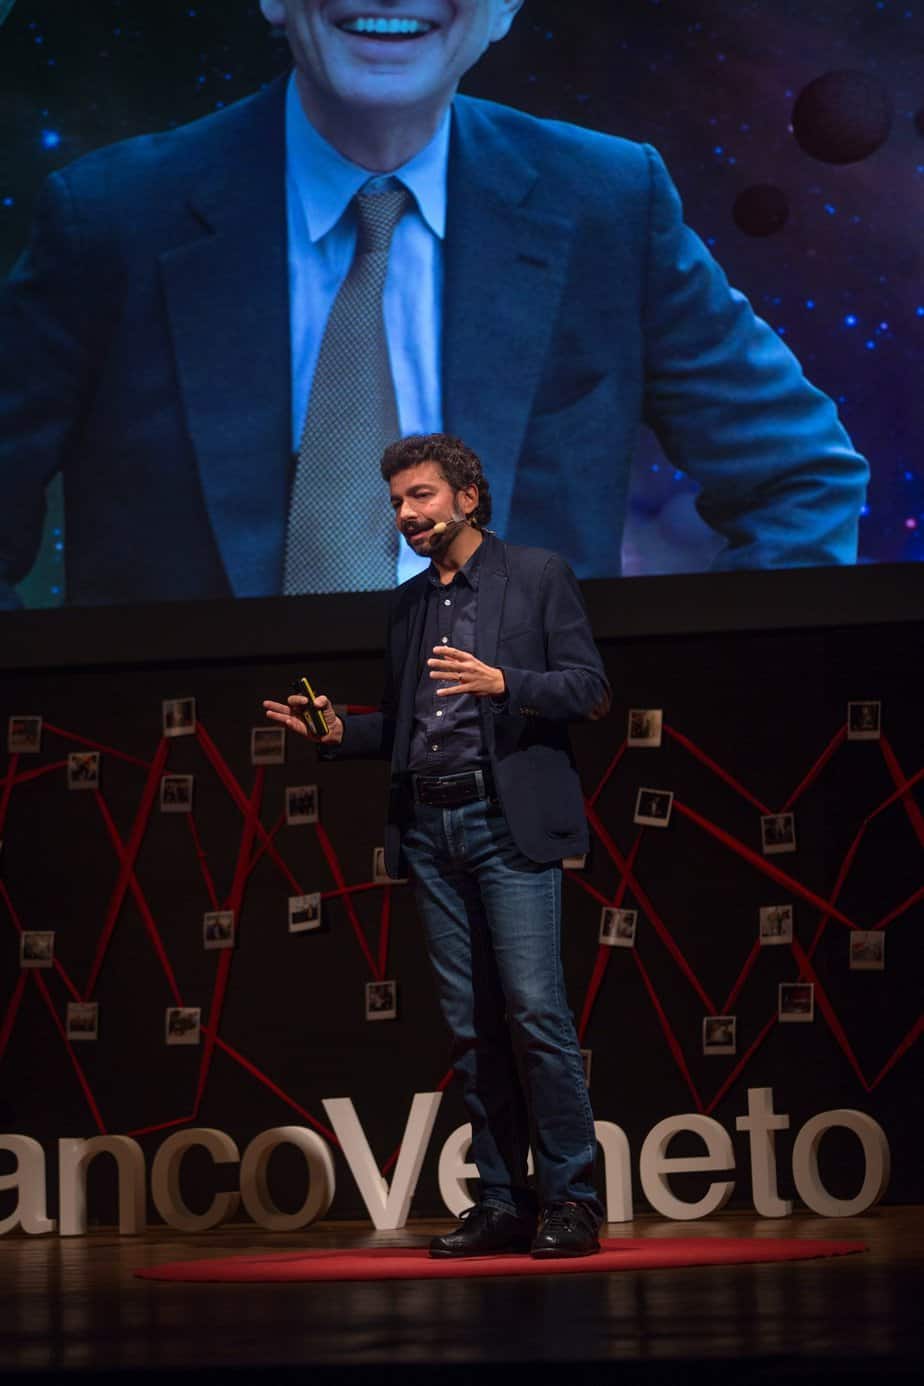 TEDxCastelfrancoVeneto_2019